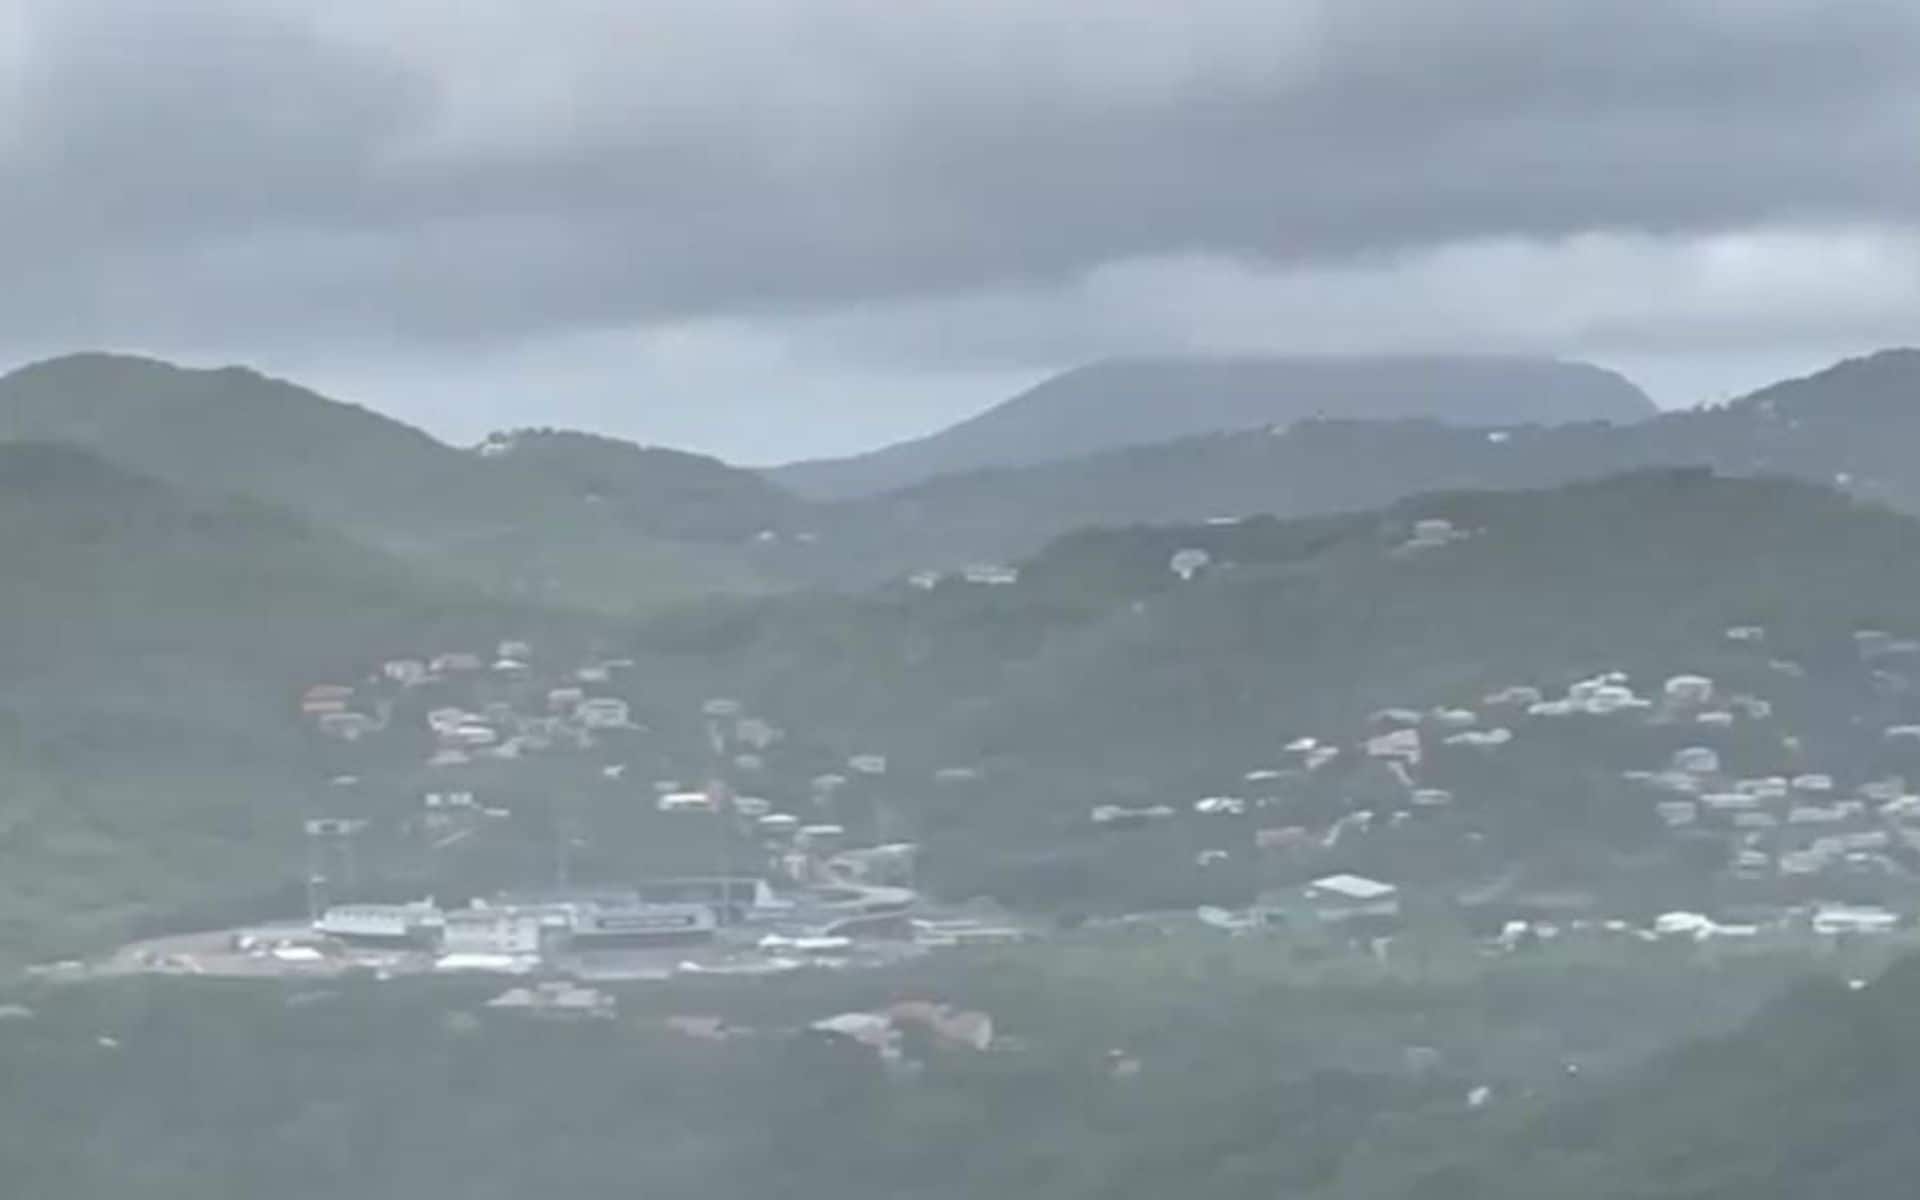 Heavy Rain in St. Lucia Ahead of Ind vs Aus Clash [x.com]